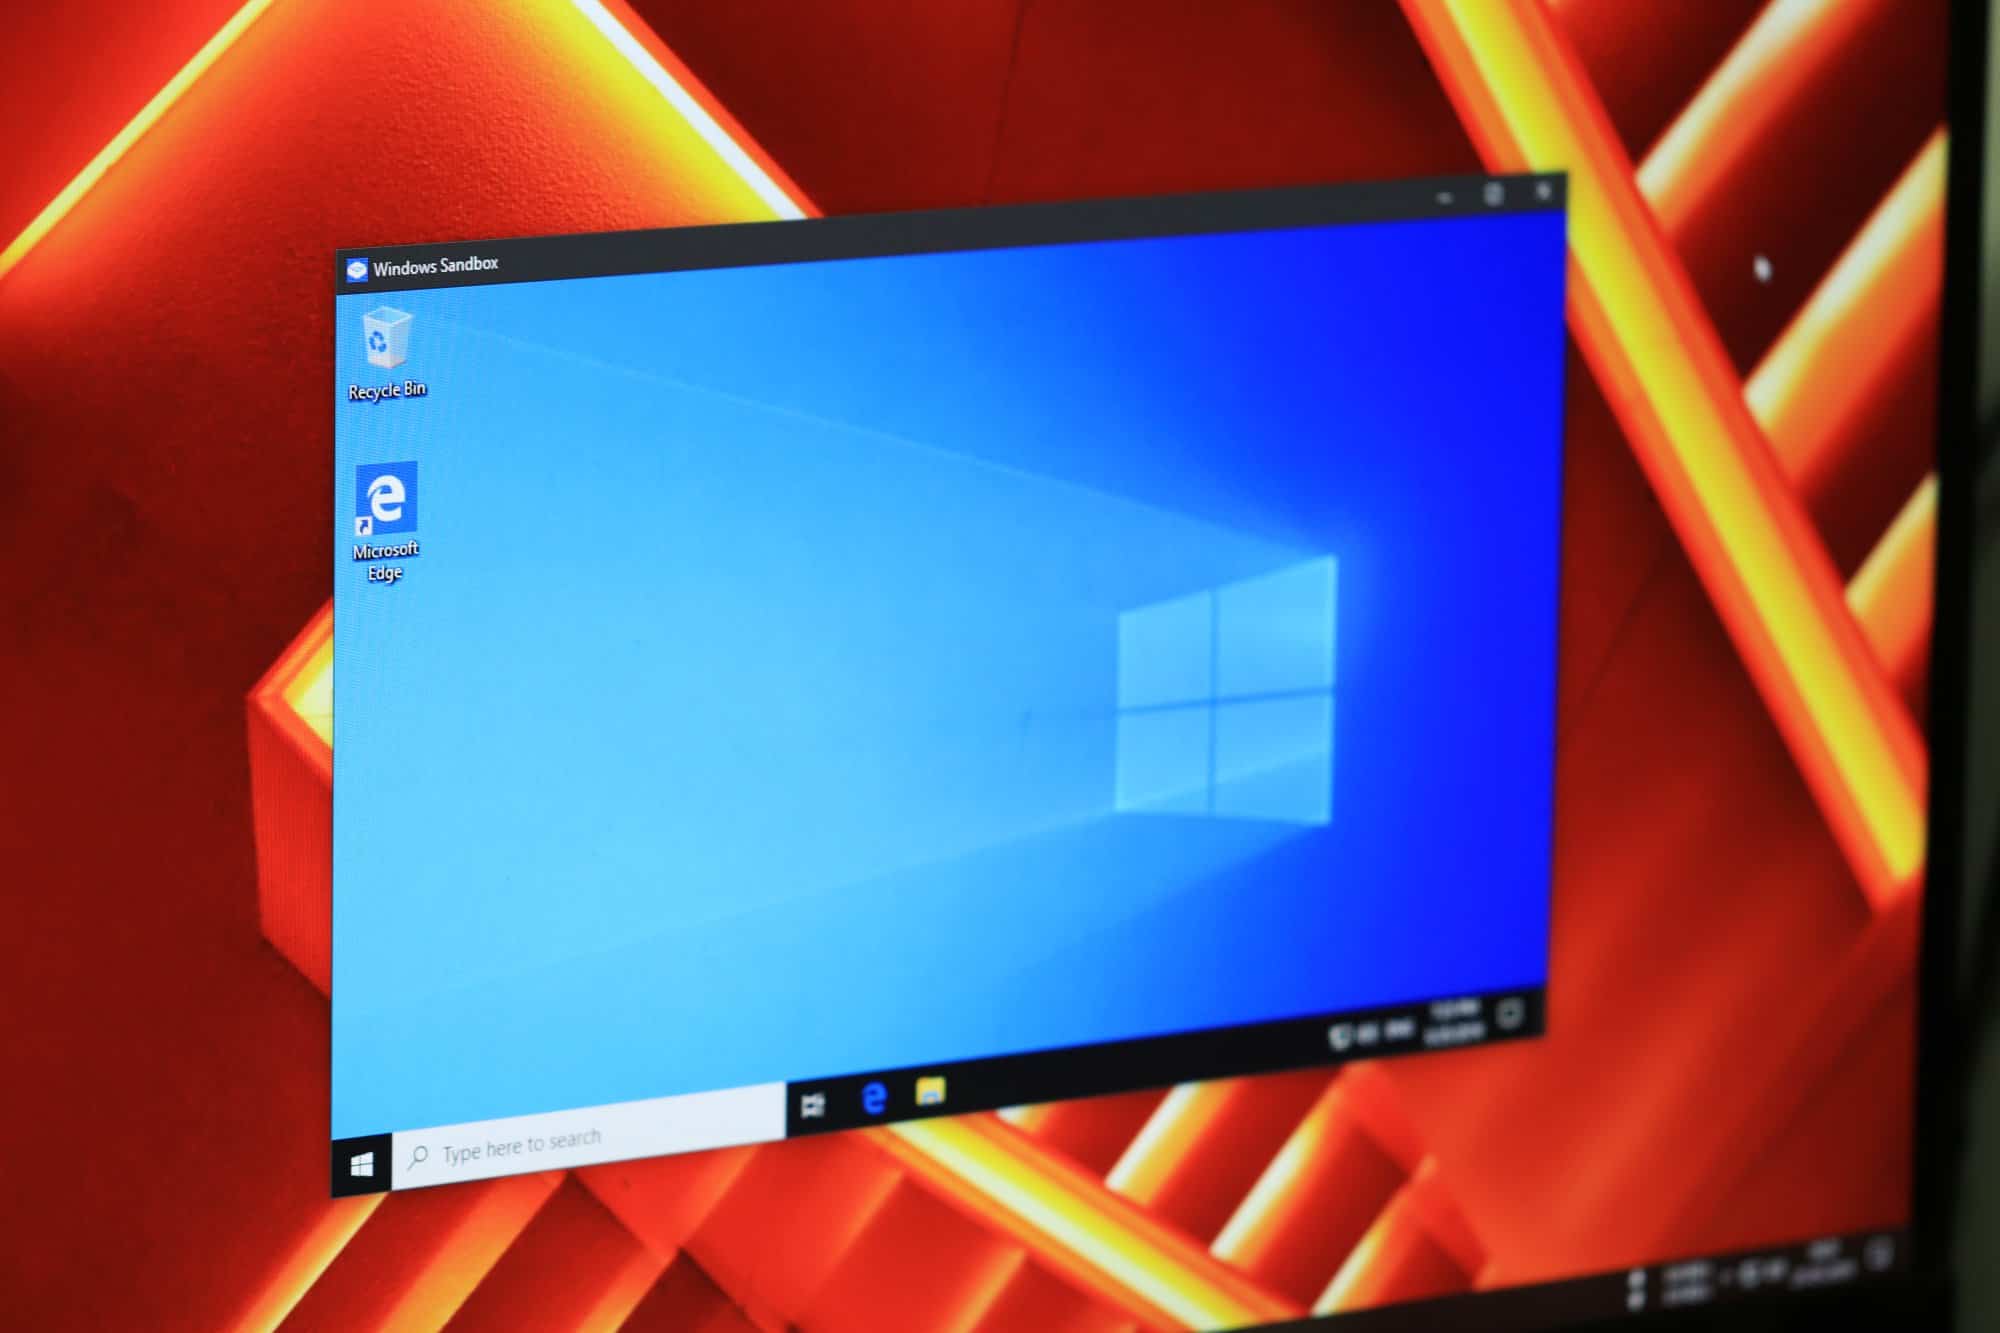 How to Use Windows Sandbox on Windows 10